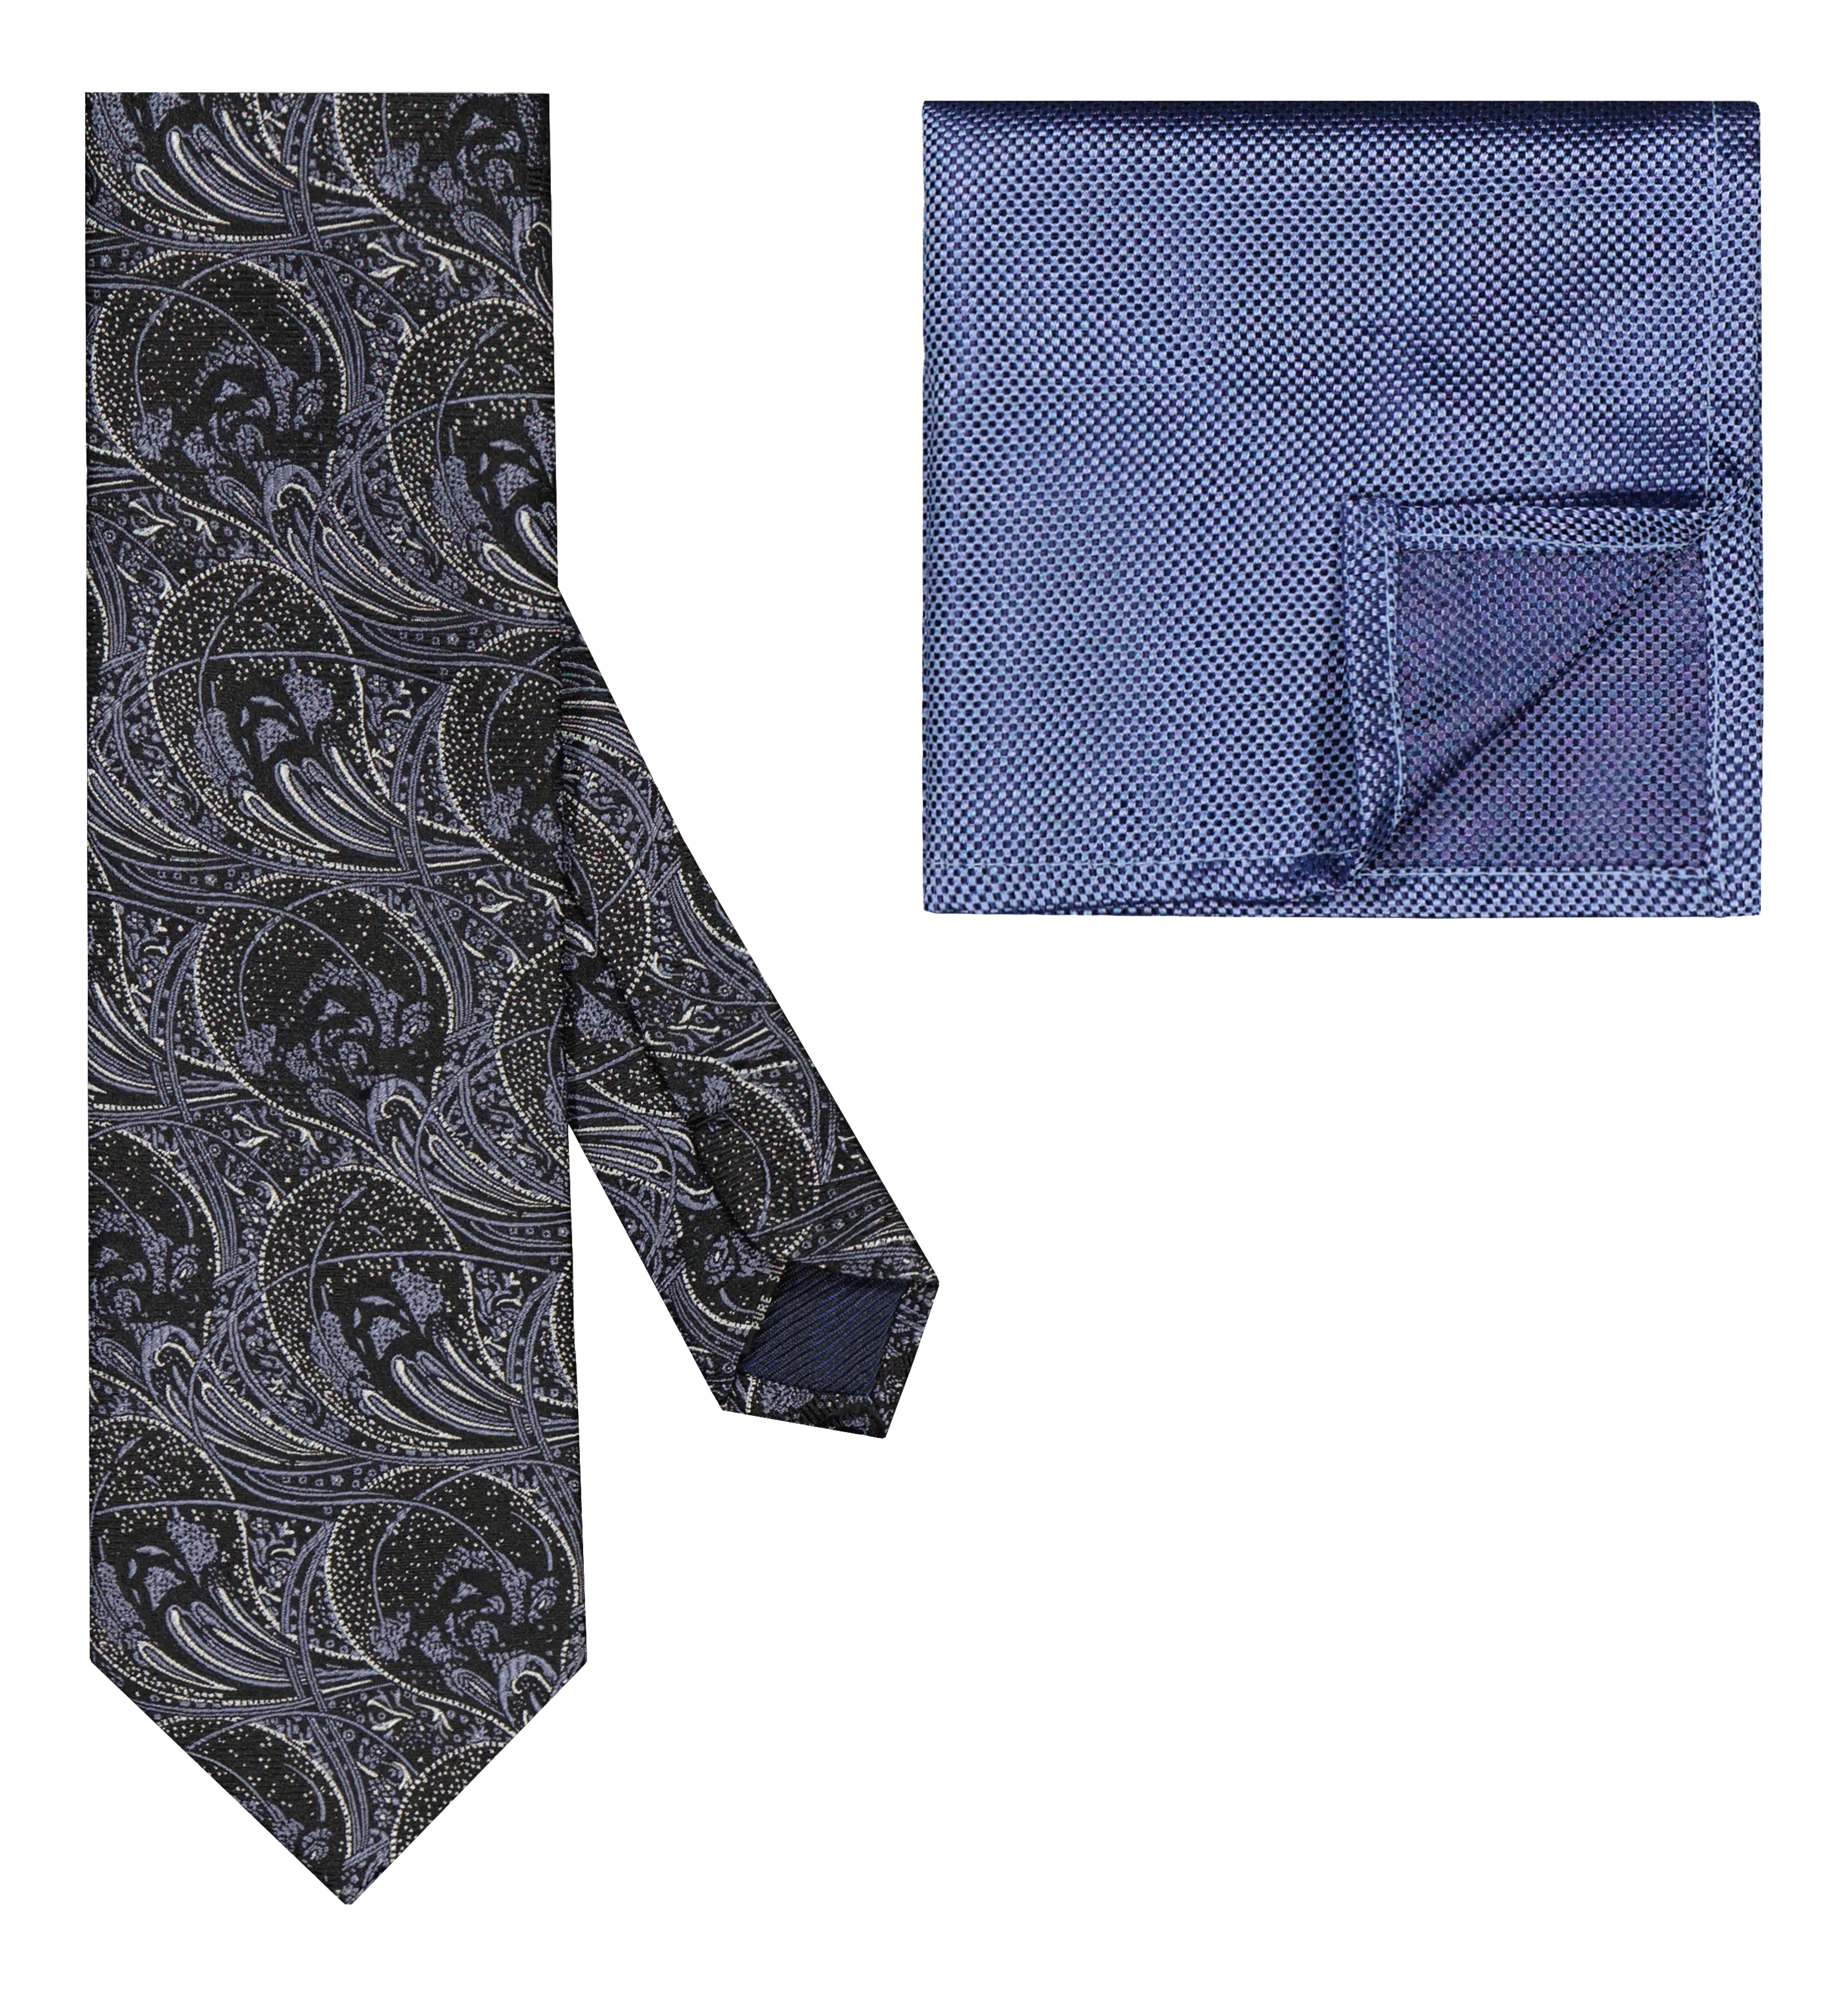 Matex solmio ja taskuliina